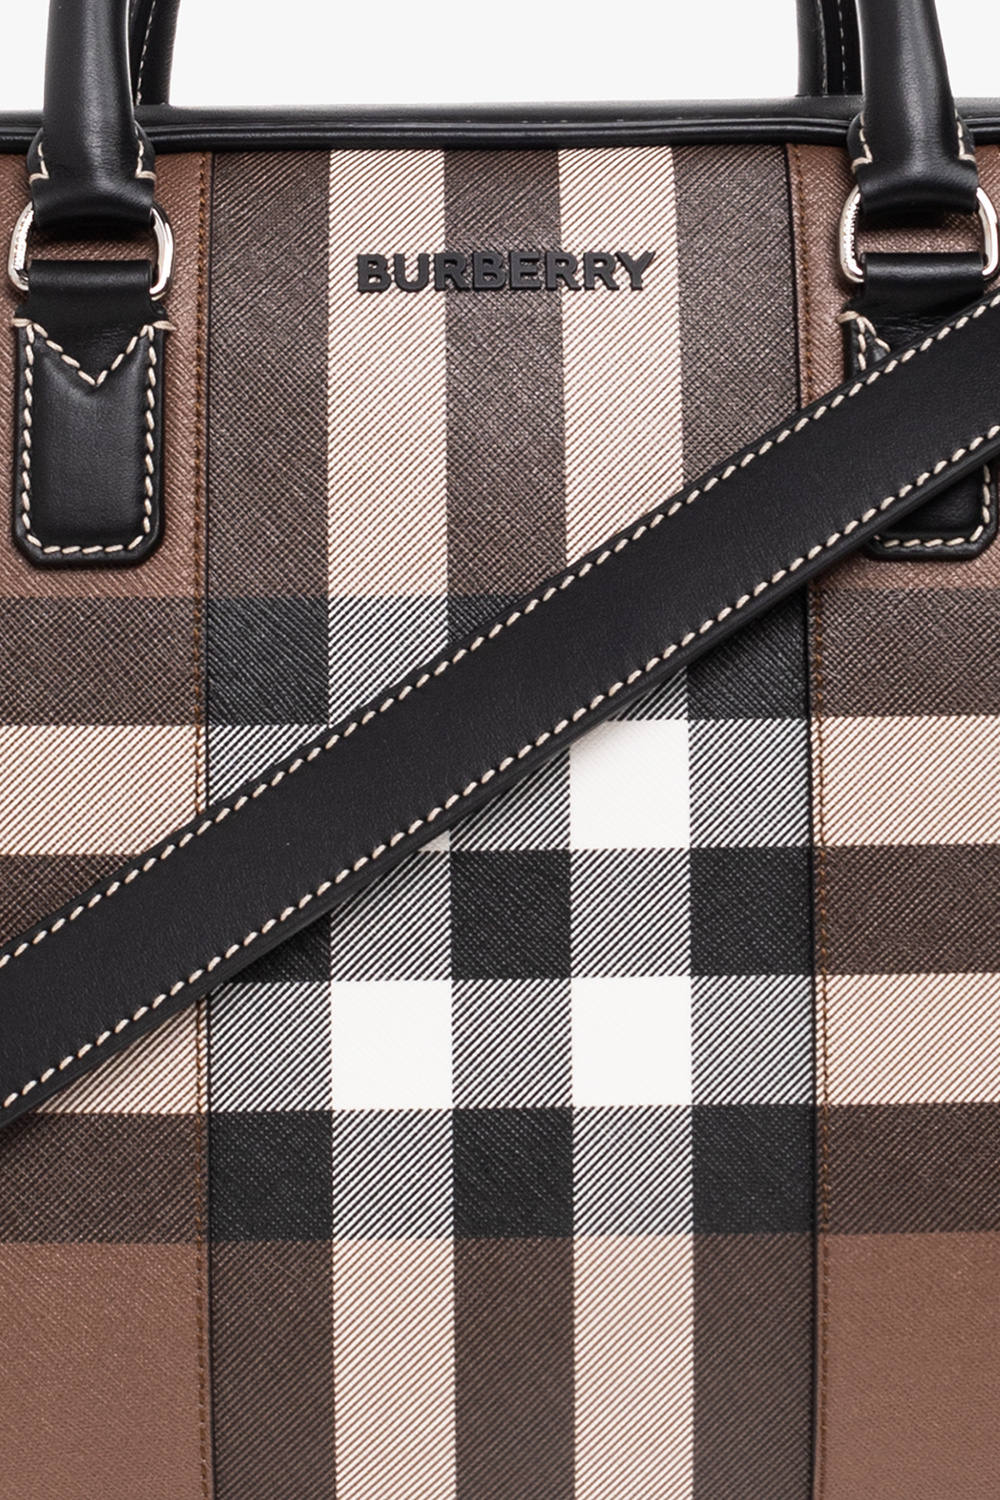 Burberry ‘Ainsworth’ shoulder bag